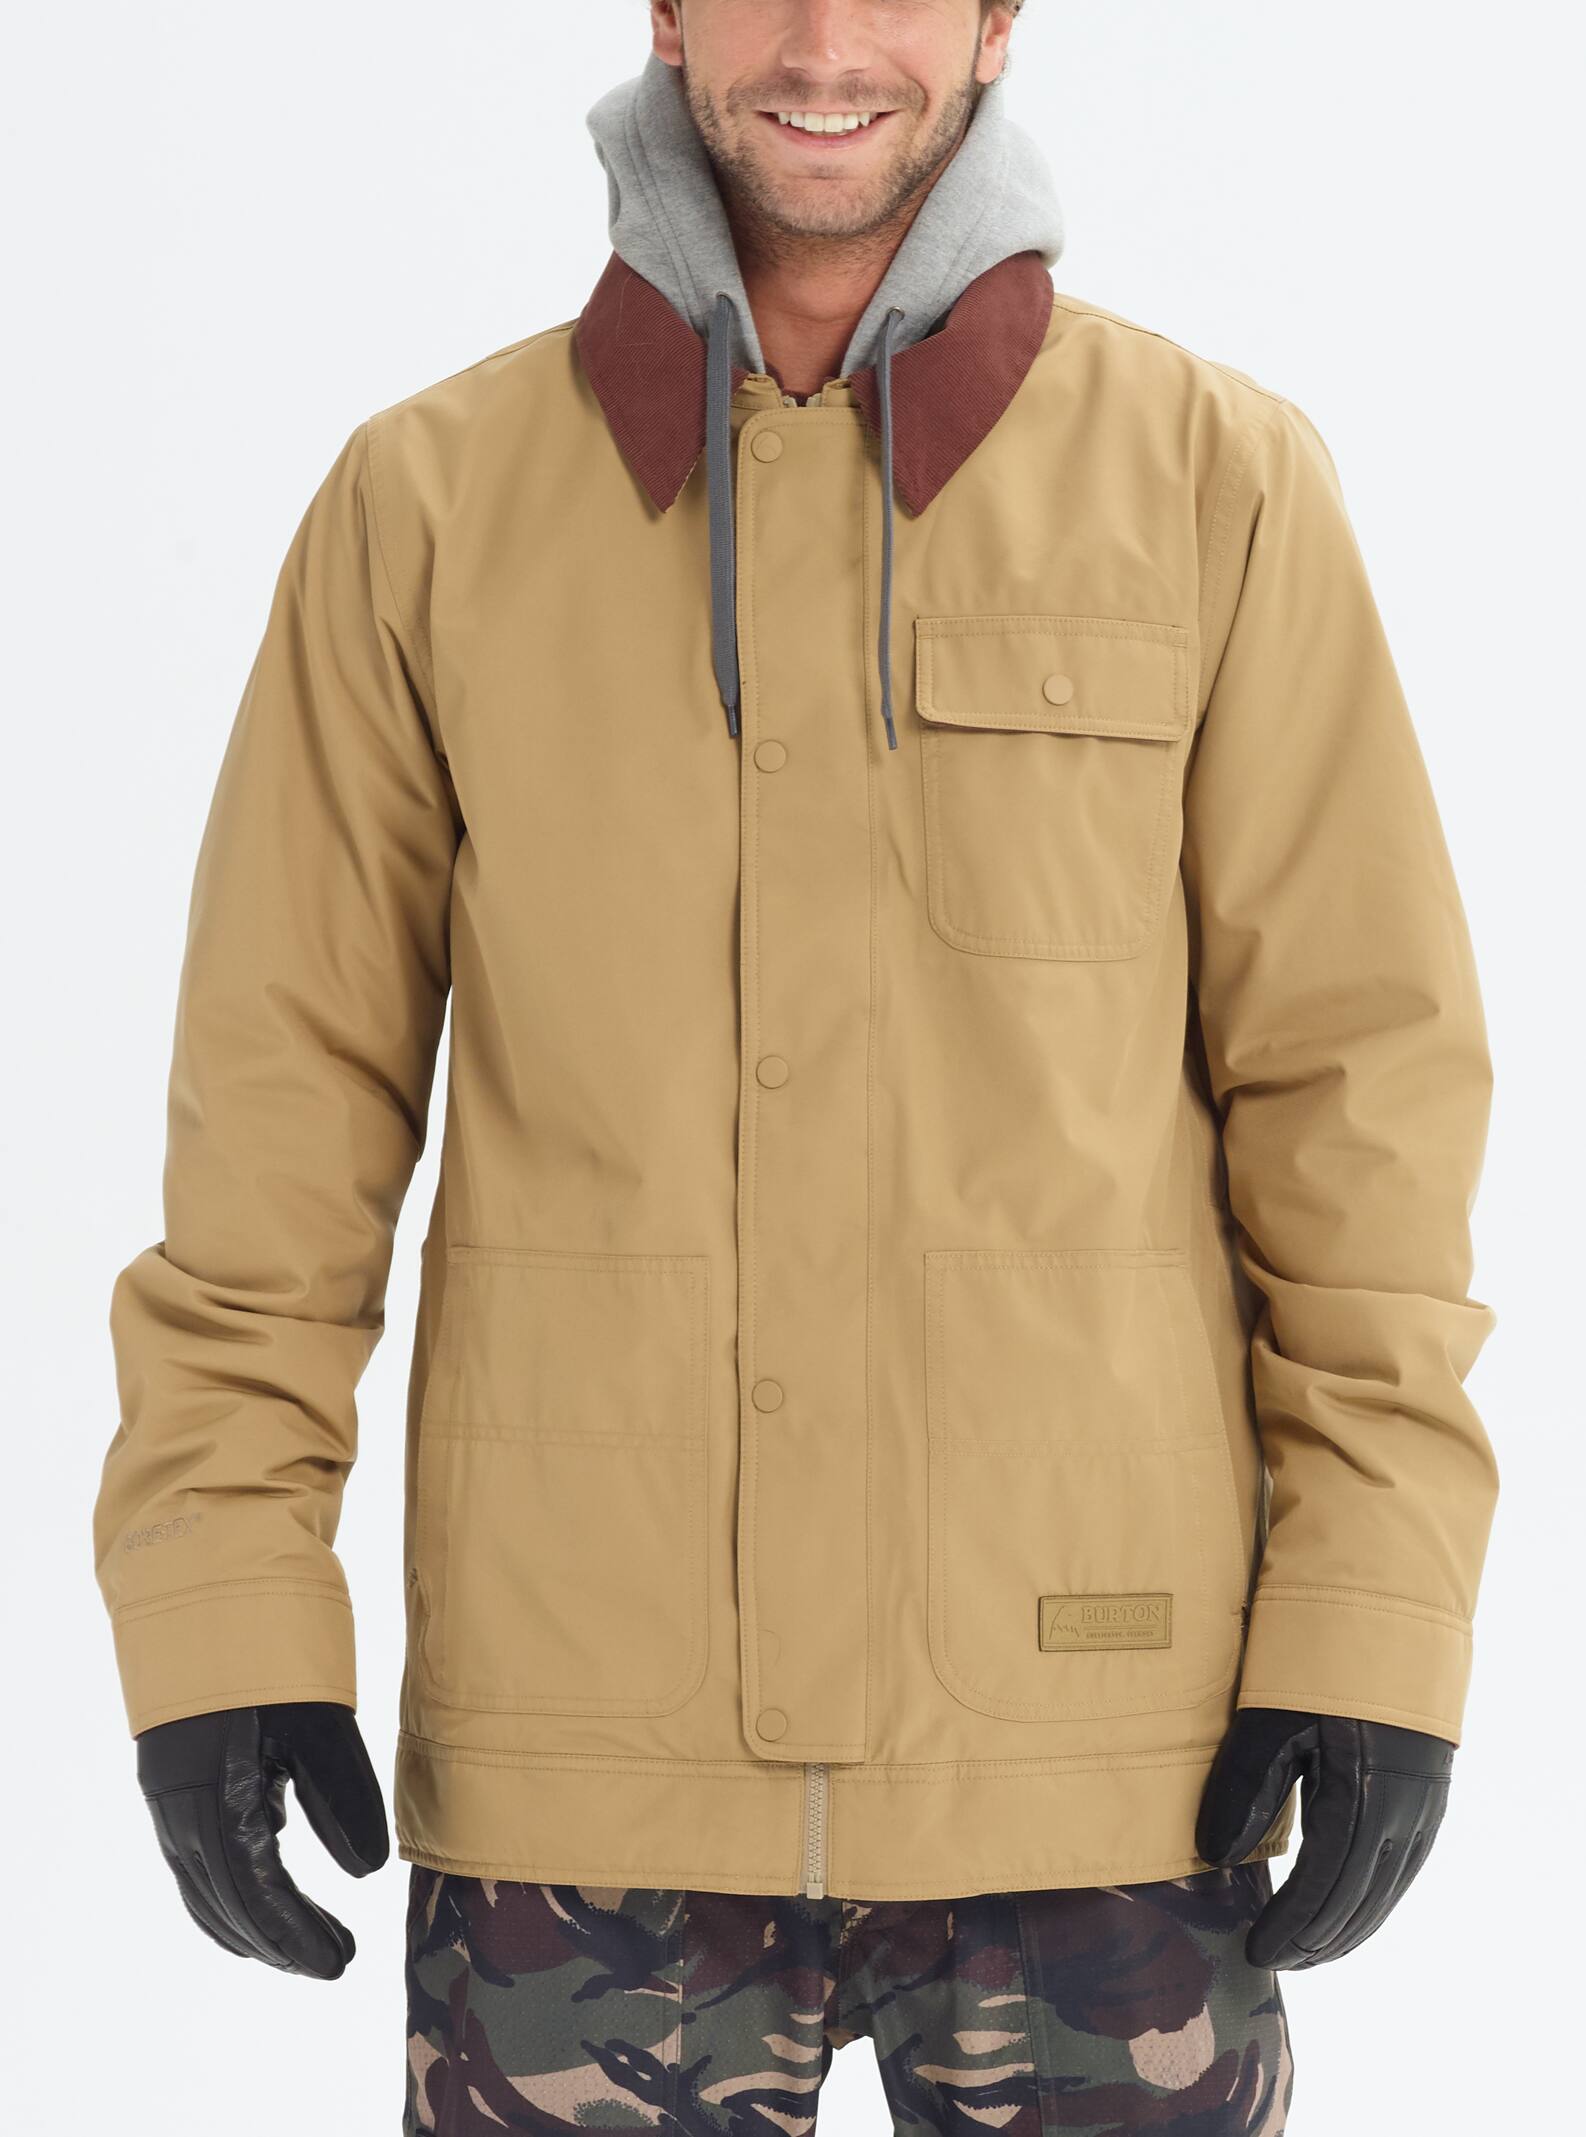 Men's Burton GORE-TEX Dunmore Jacket | Burton.com Winter 2019 US